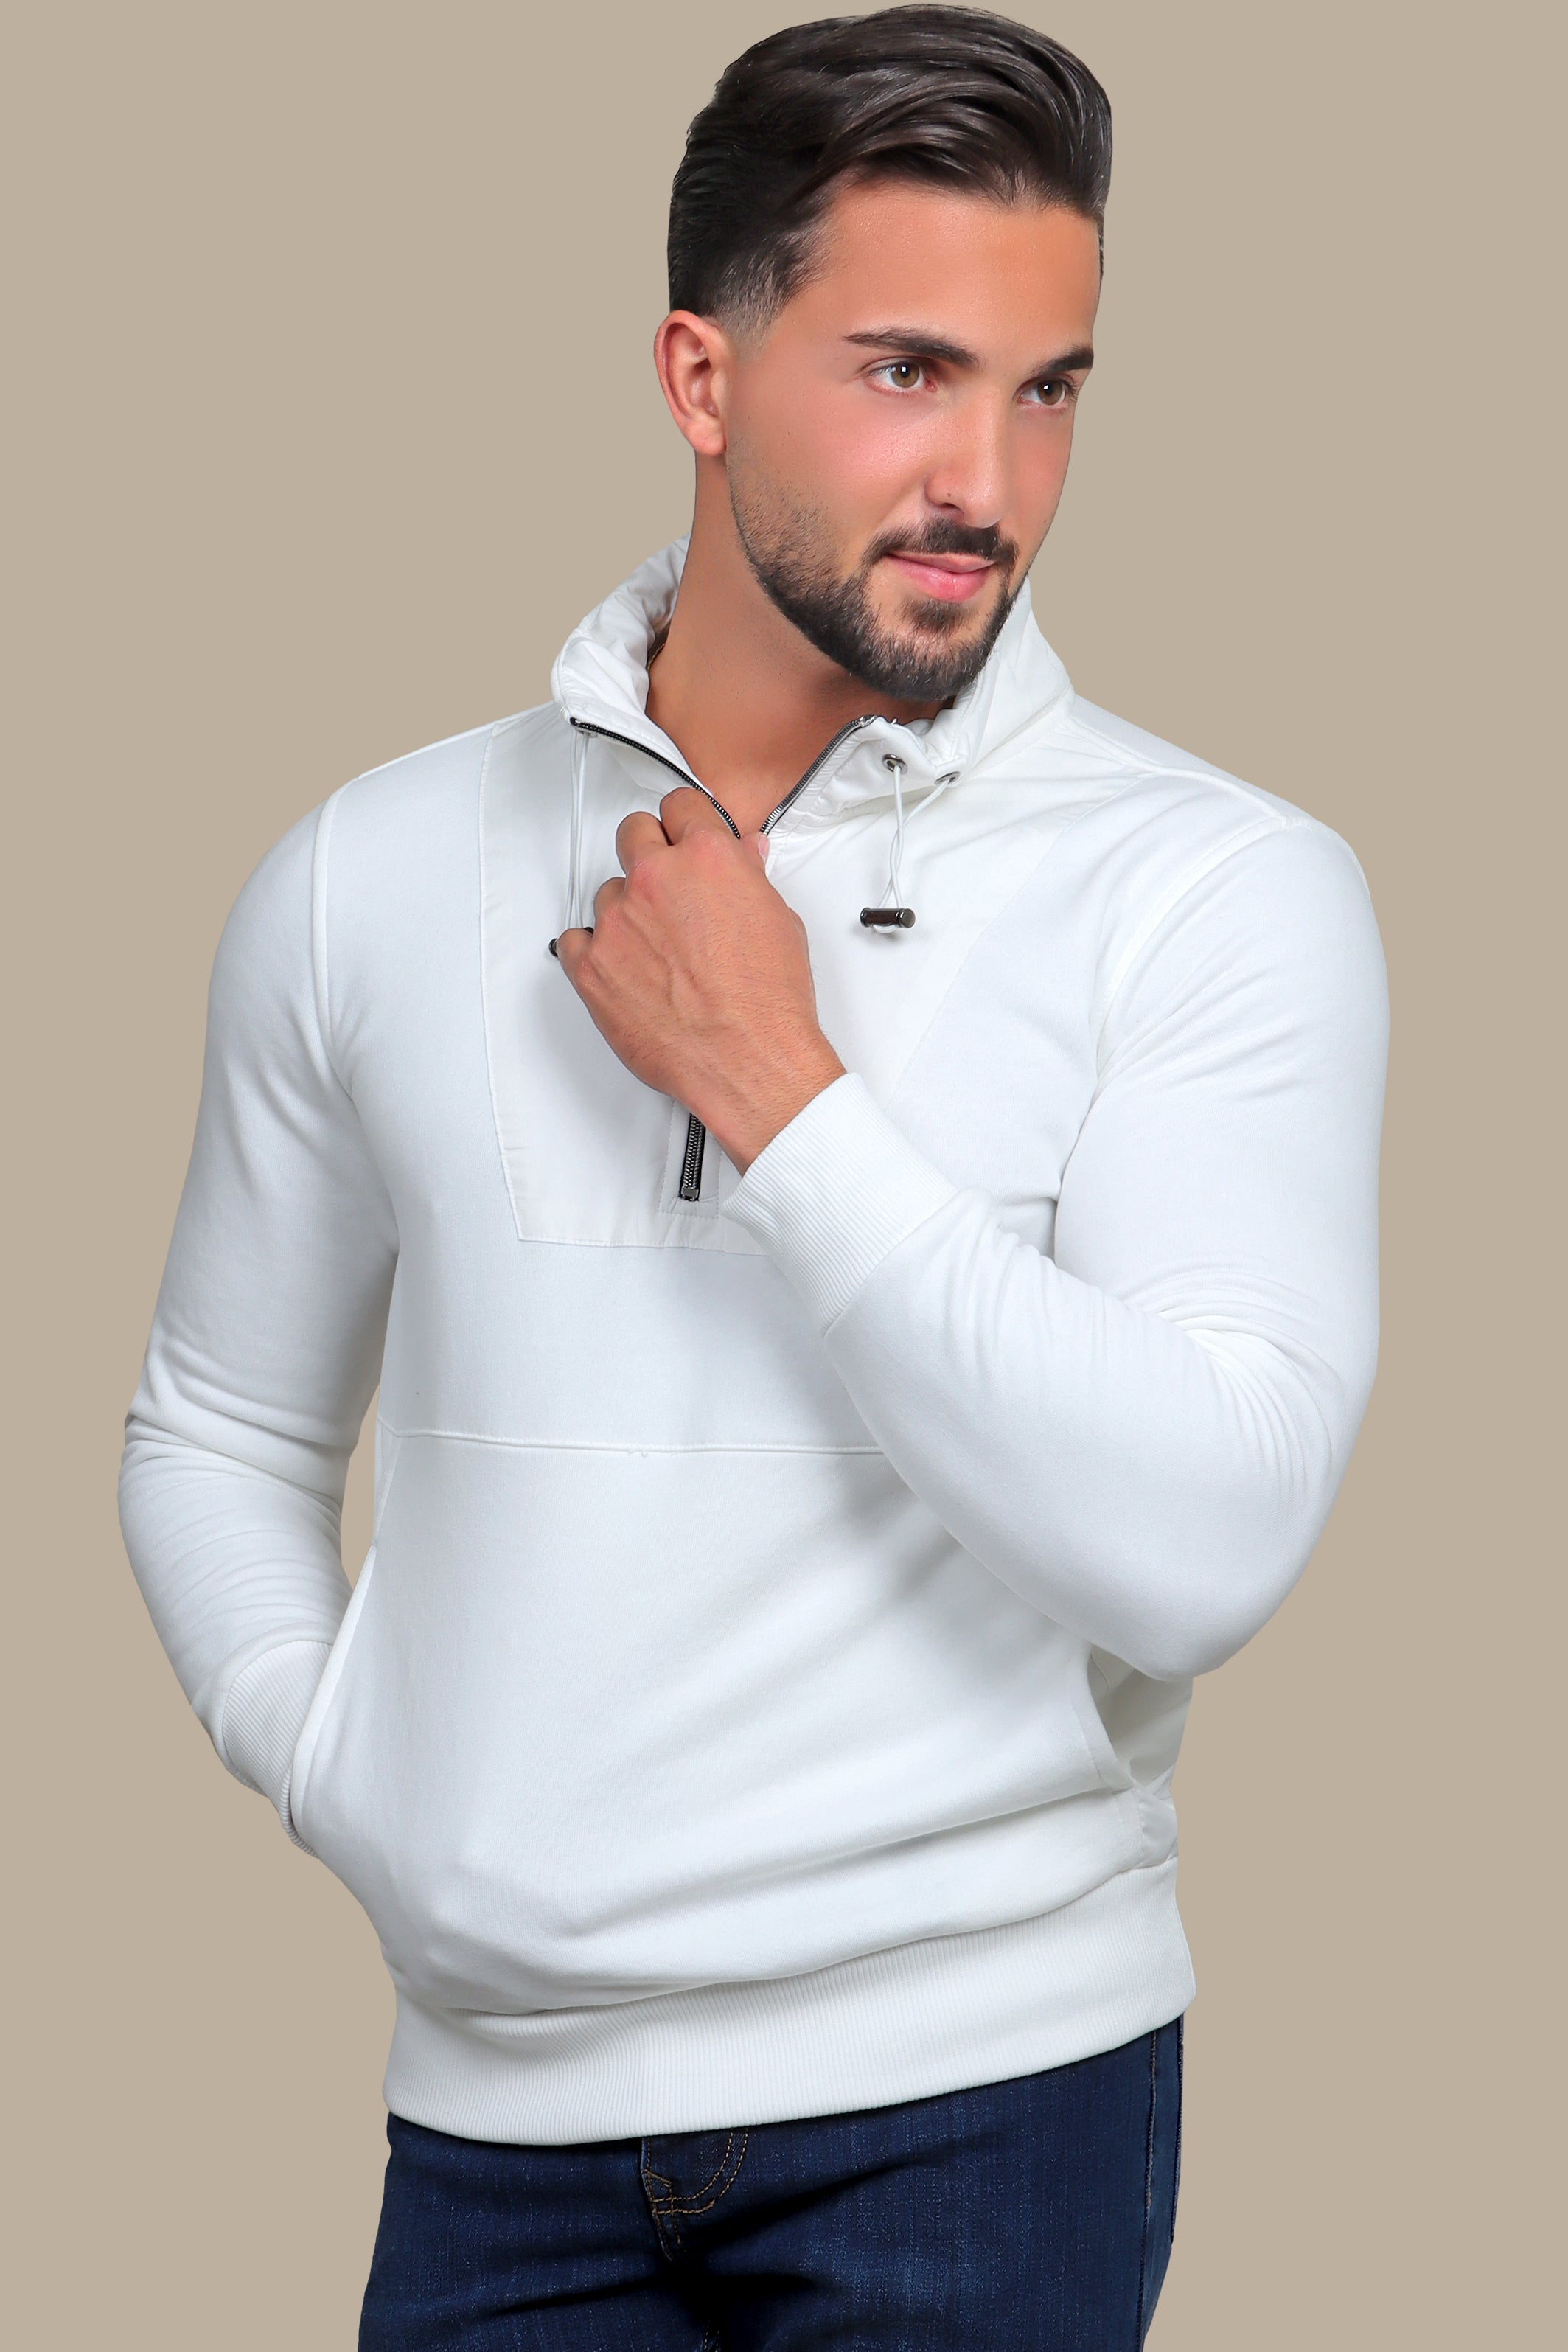 Whimsical Wonder: The Eccentric Half-Zipper Sweatshirt in Multifarious White Hues